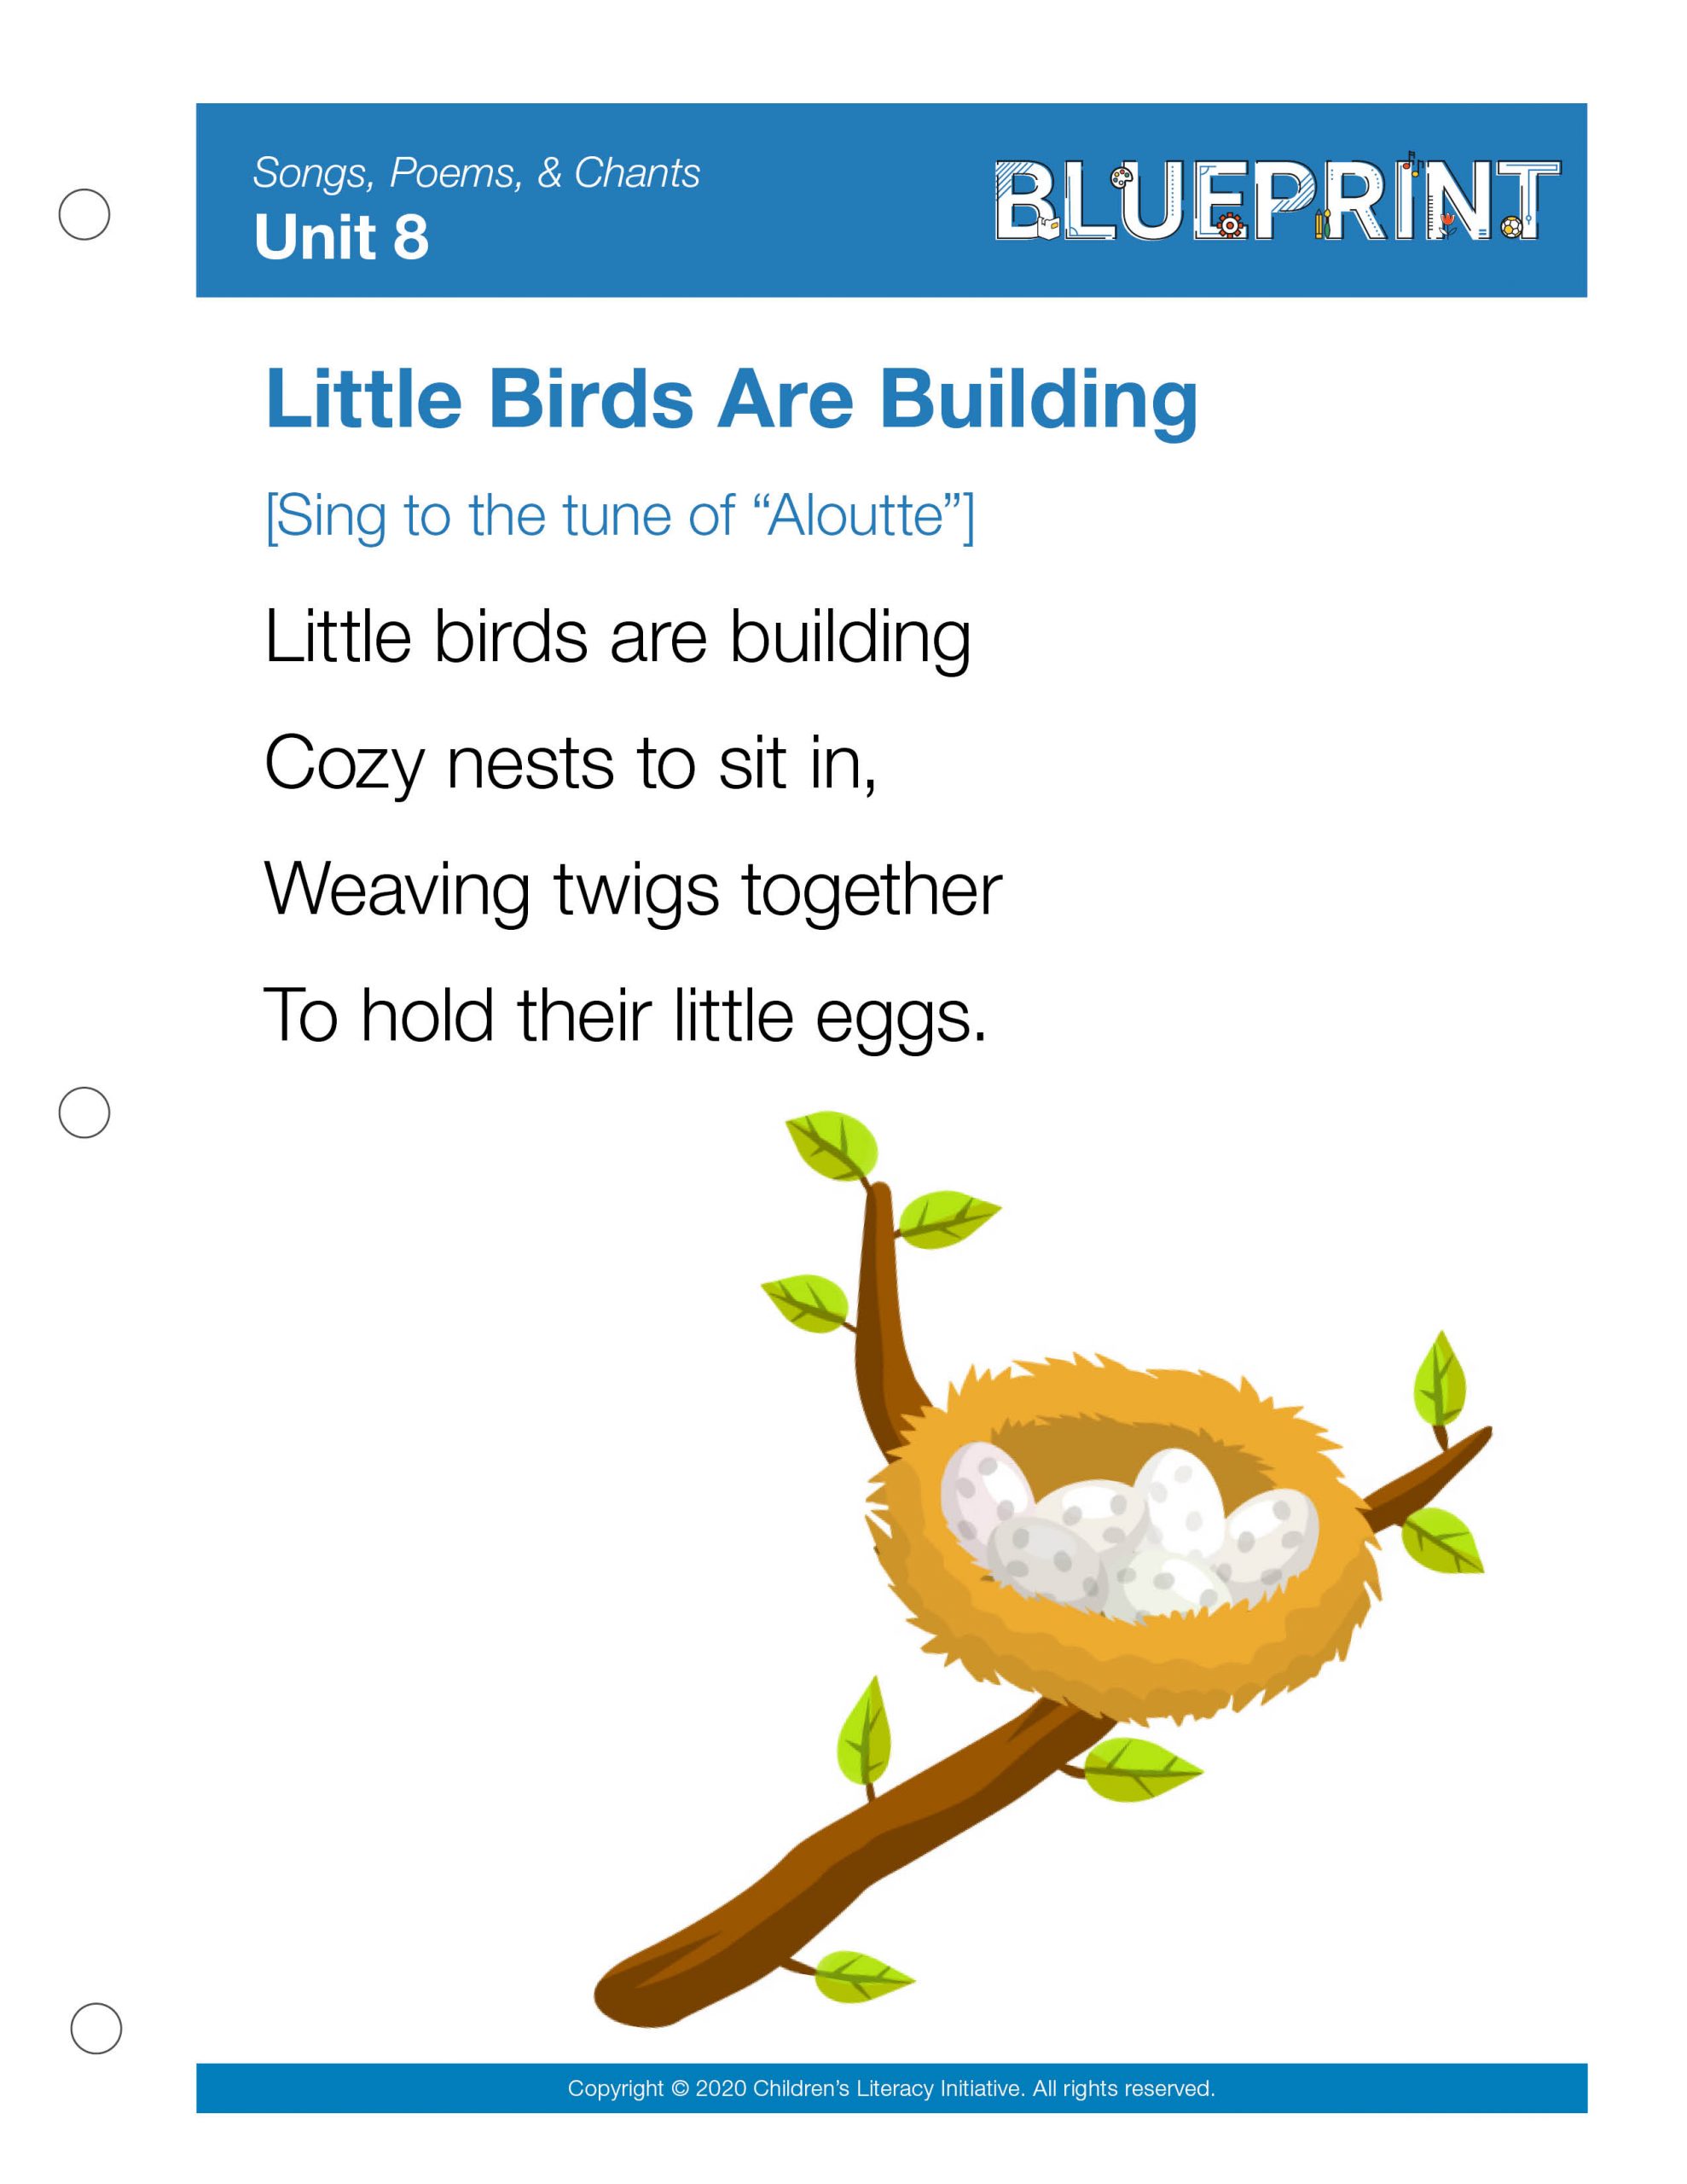 Little Birds are Building Week 3